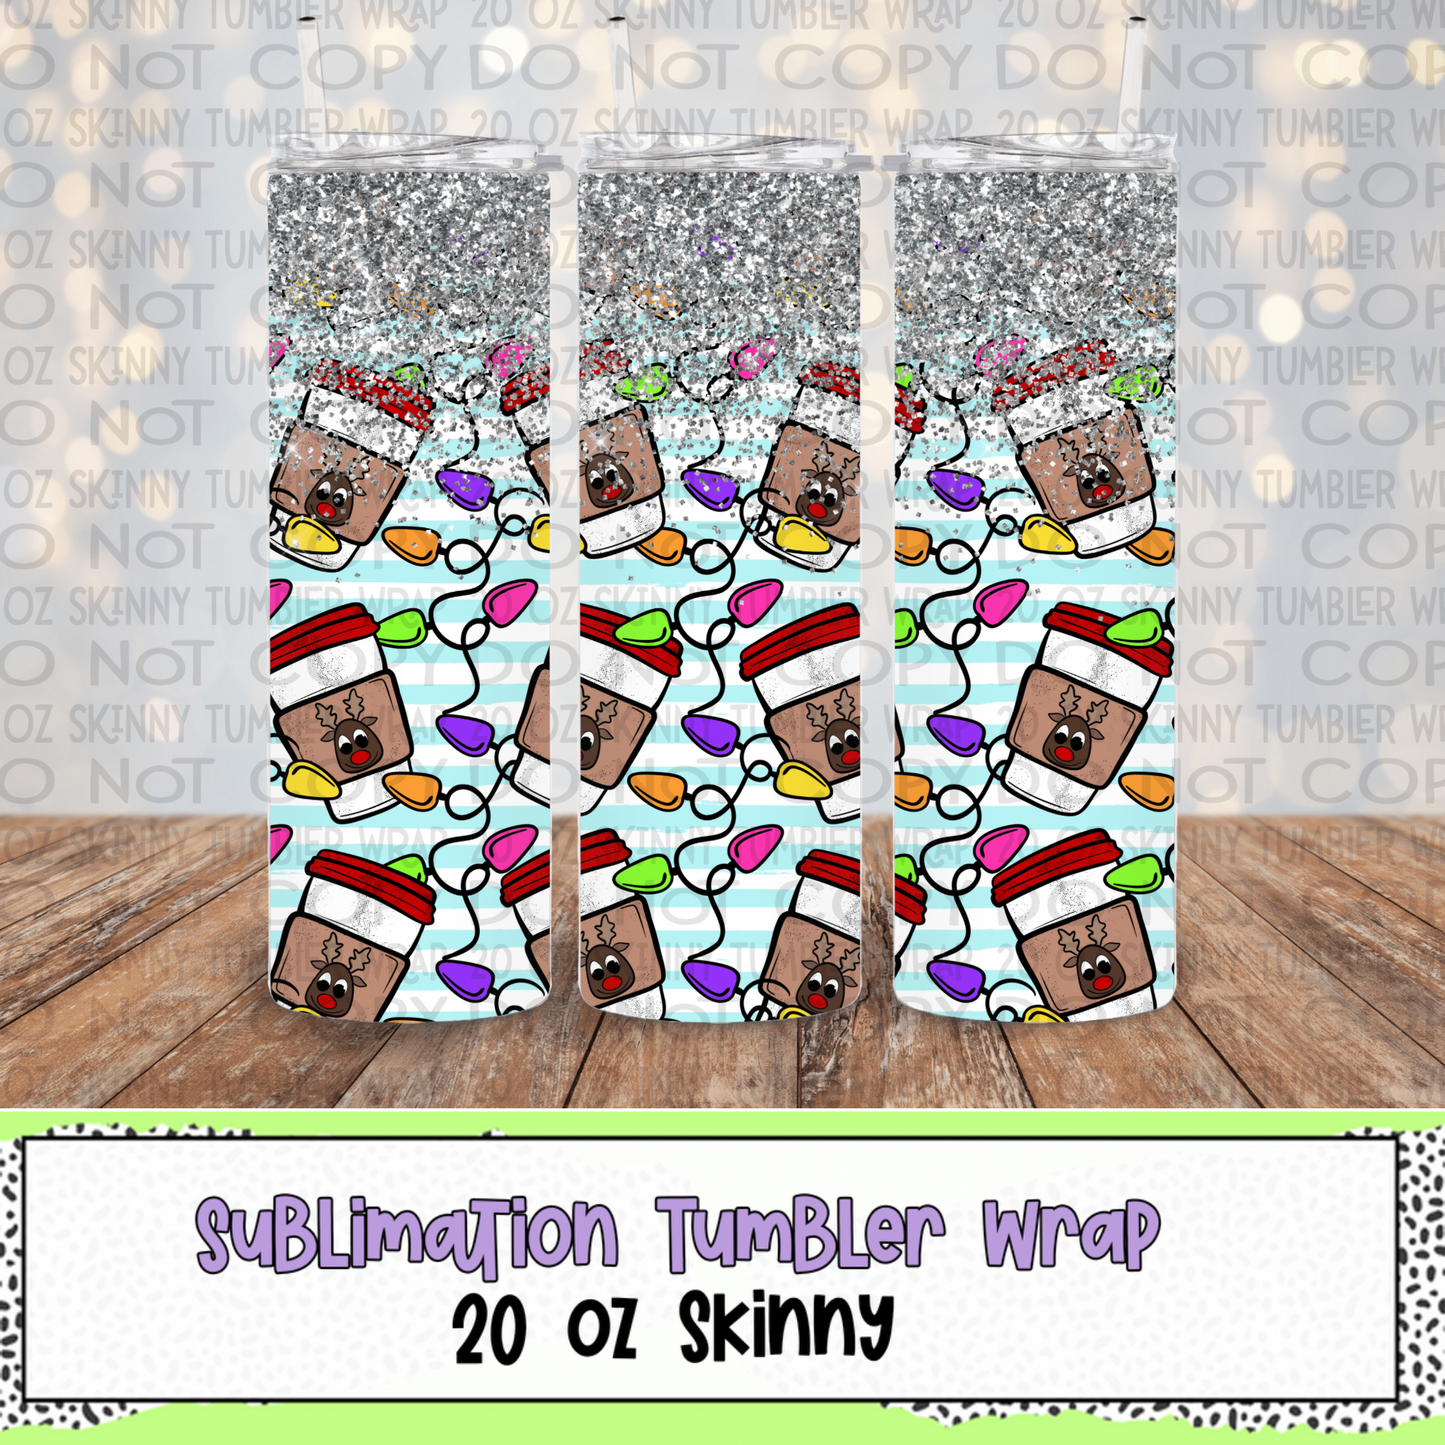 Coffee And Christmas Lights 20 Oz Skinny Tumbler Wrap - Sublimation Transfer - RTS